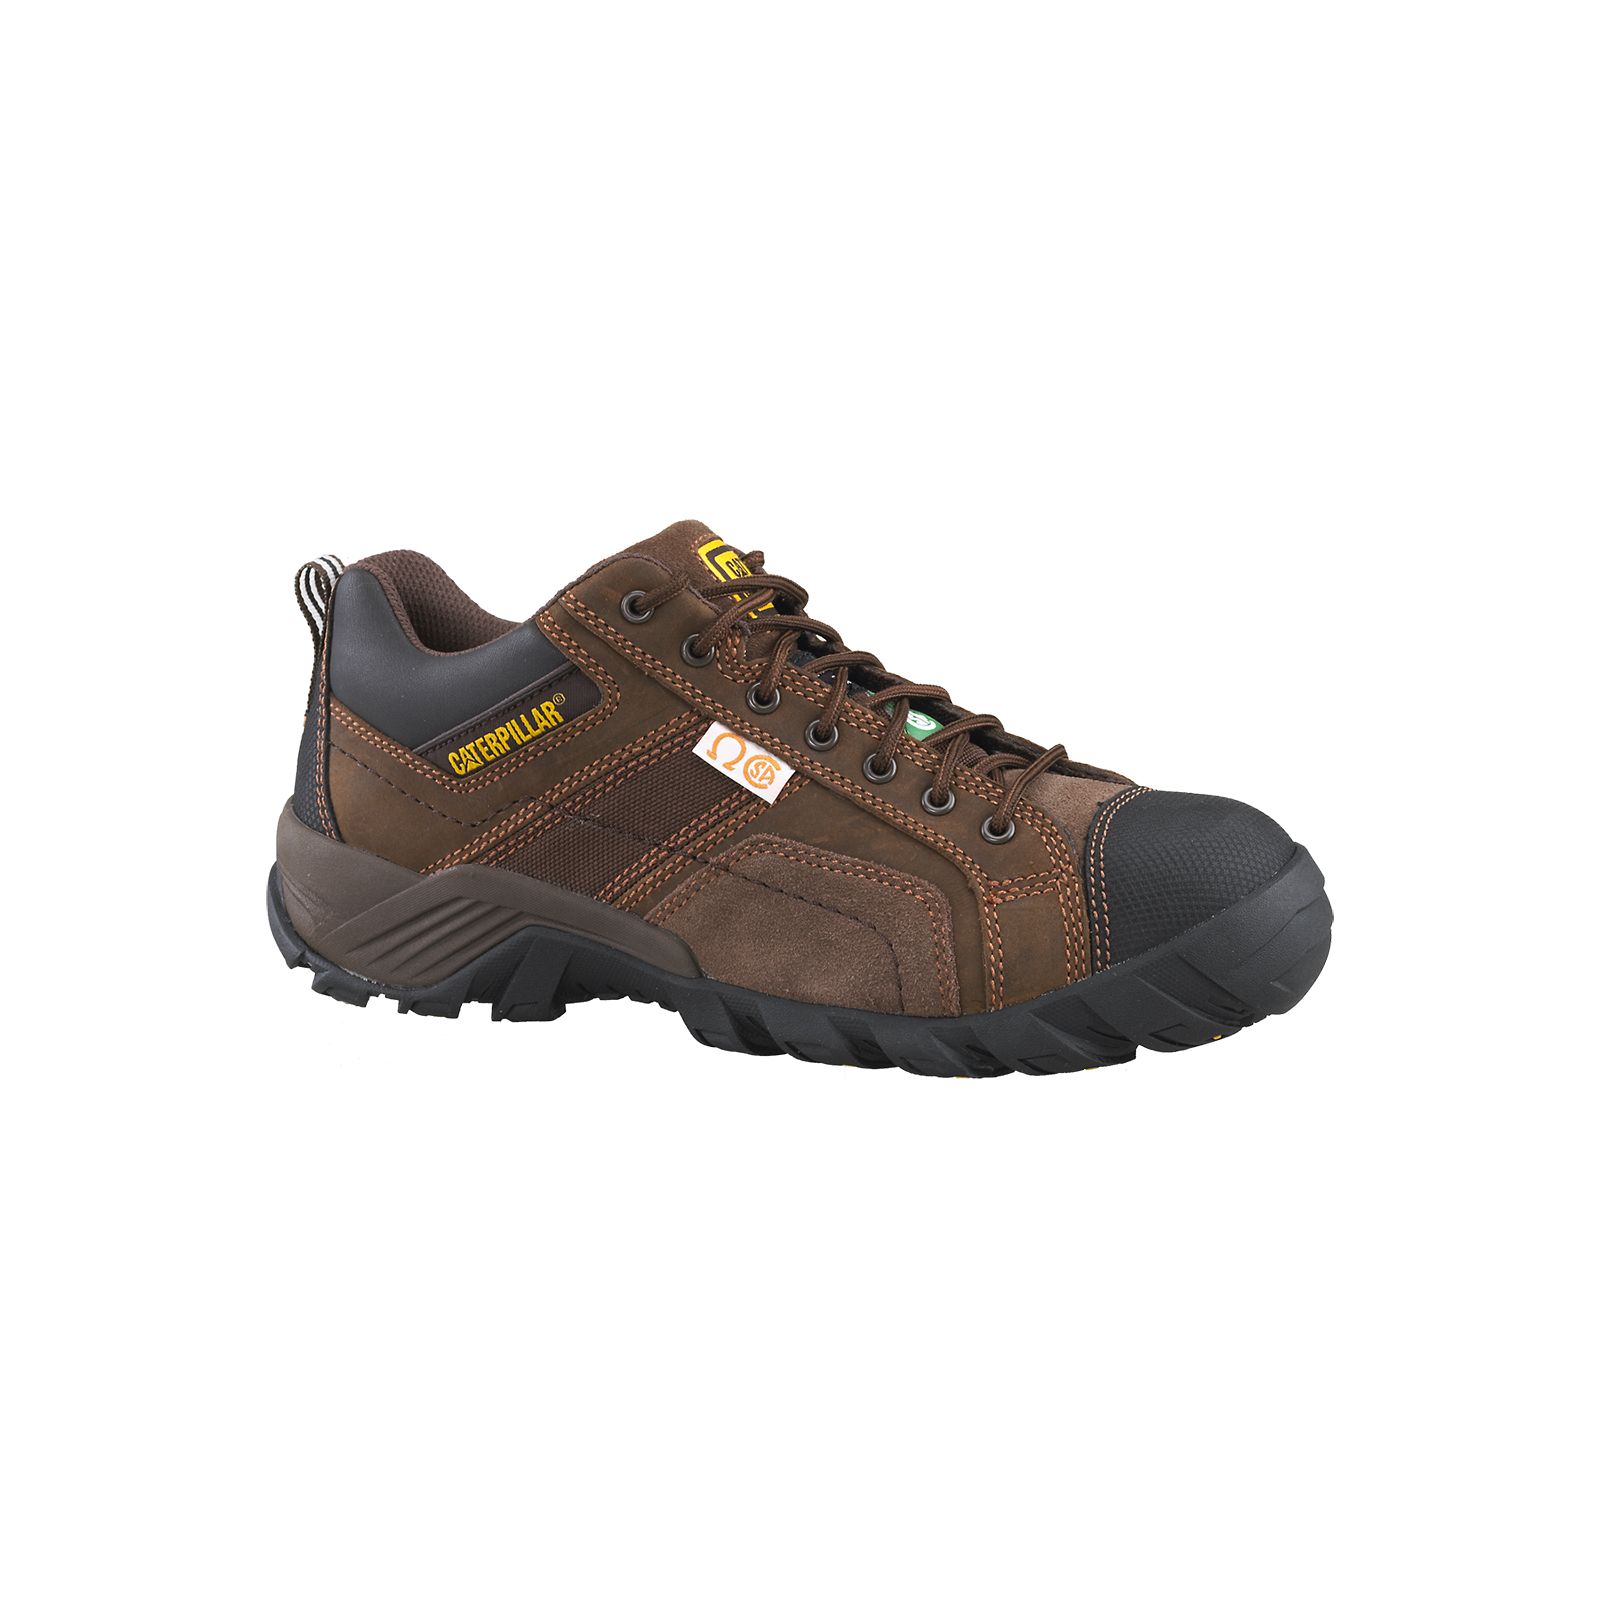 Caterpillar Work Shoes UAE Online - Caterpillar Argon Csa (Composite Toe, Non Metallic) Mens - Dark Brown FLOQMC085